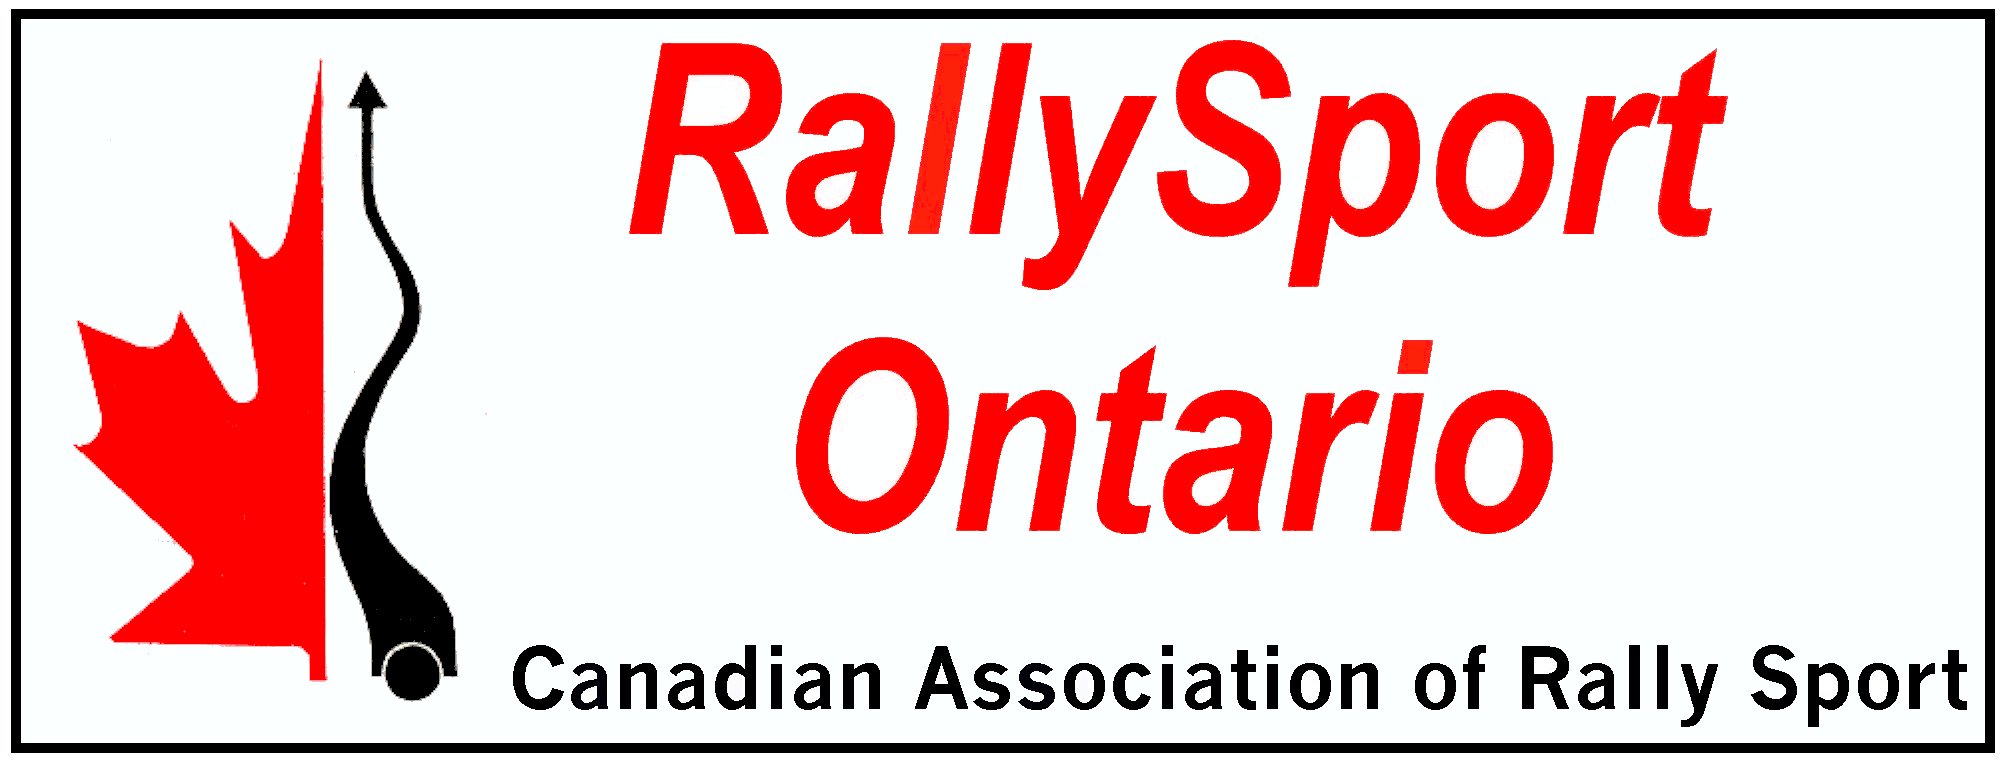 Rallysport Ontario